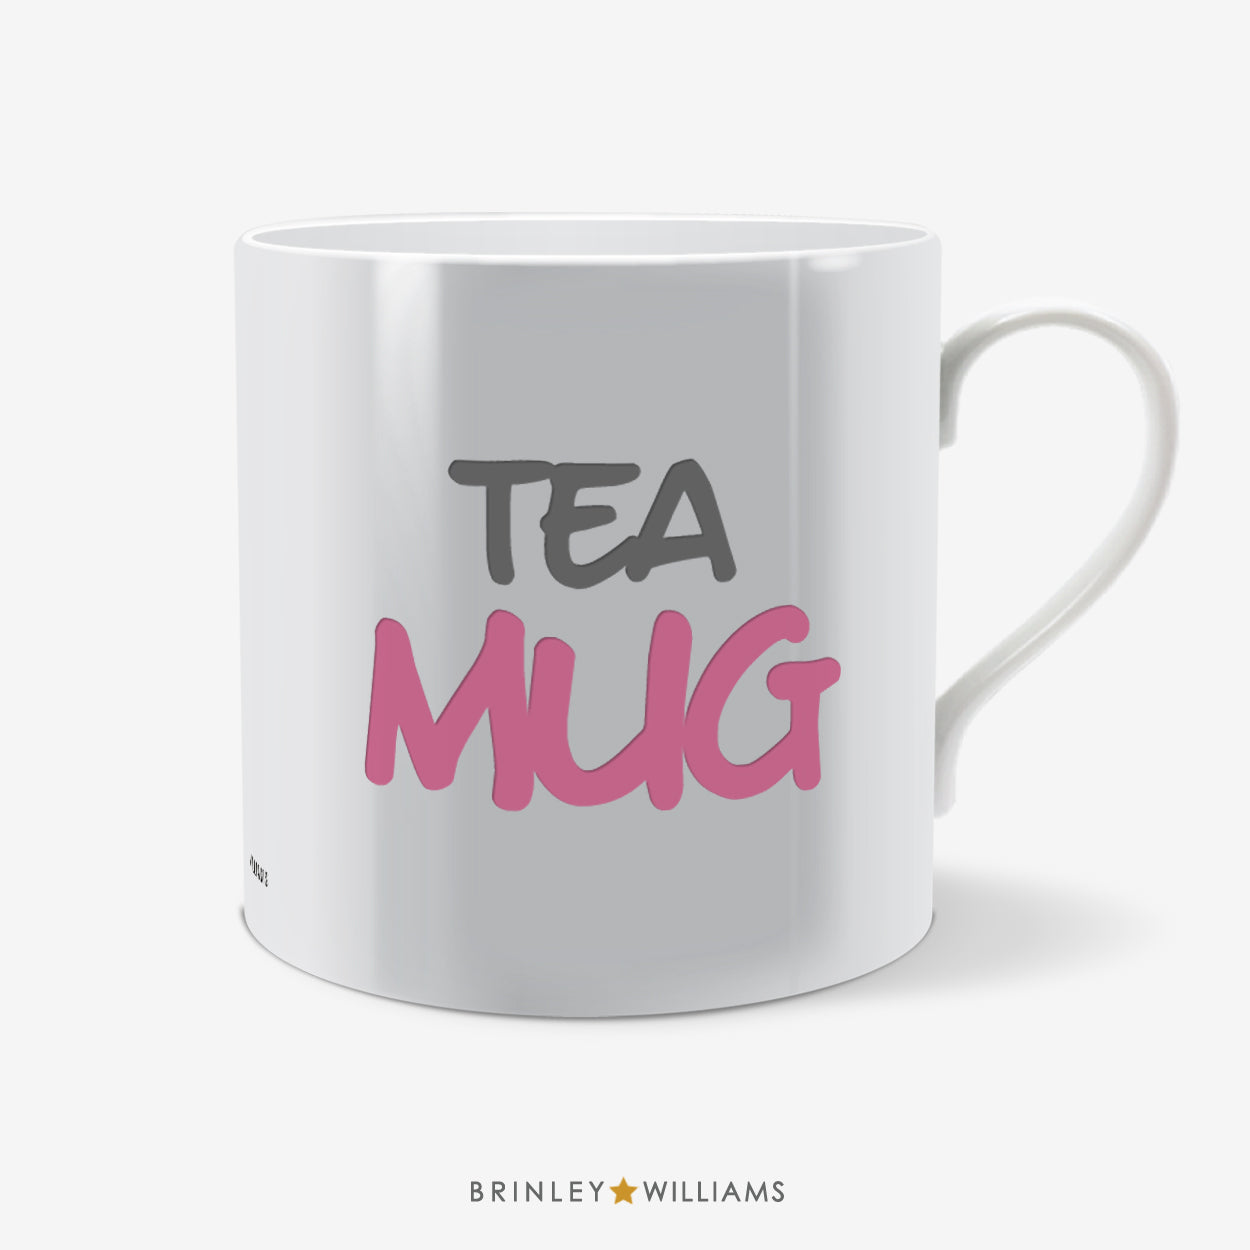 Tea Mug Fun Mug - Pink